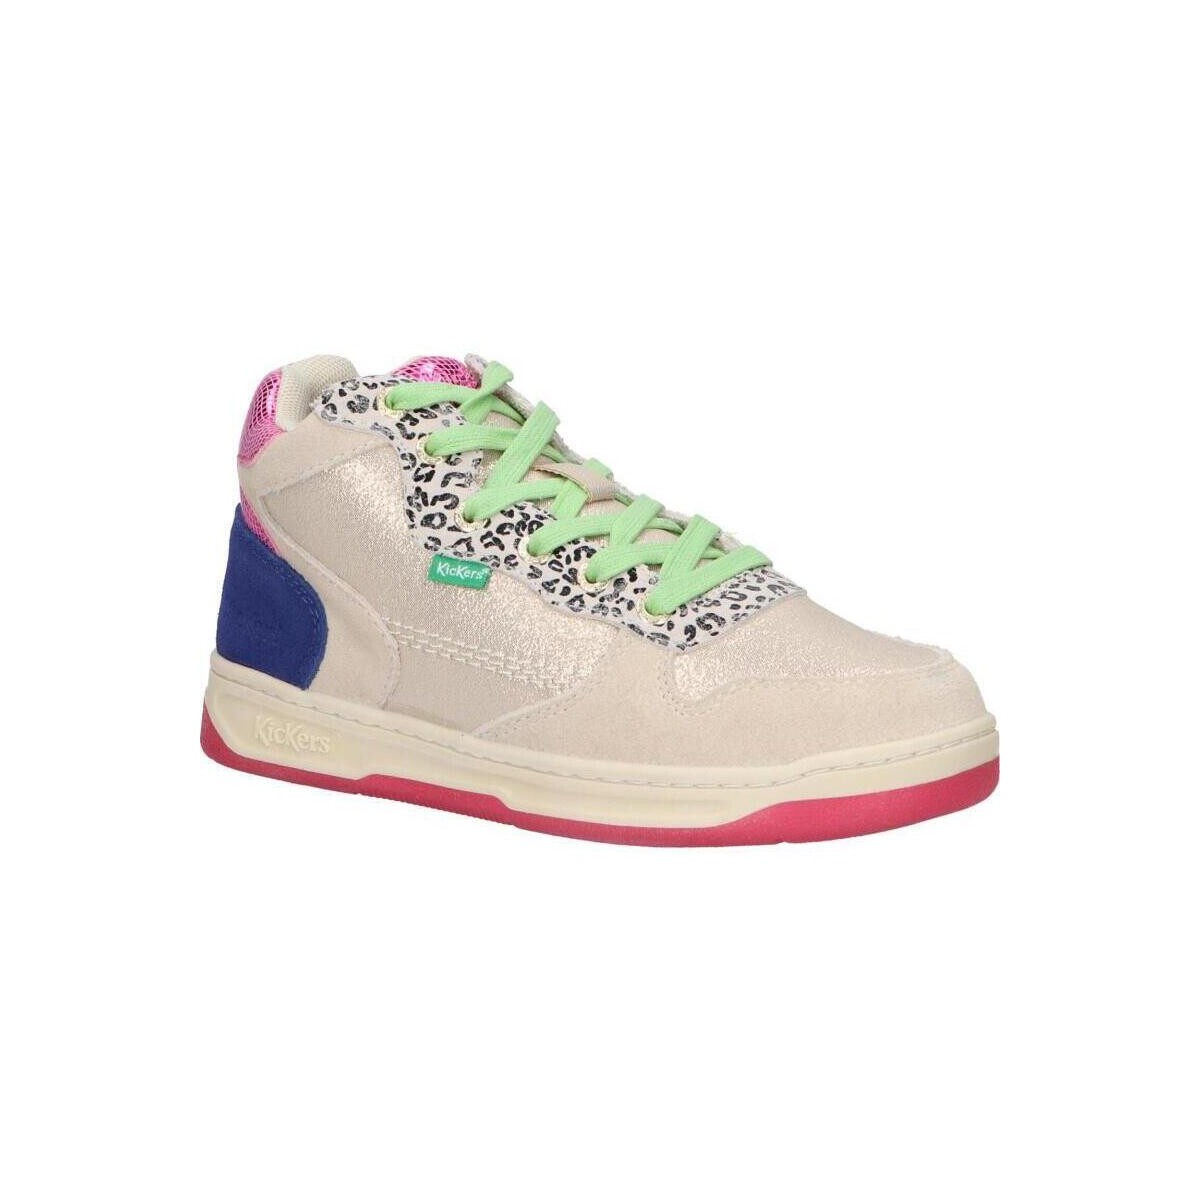 Sapatos Rapariga Sapatilhas Kickers 910883-30 KICKLAX 910883-30 KICKLAX 